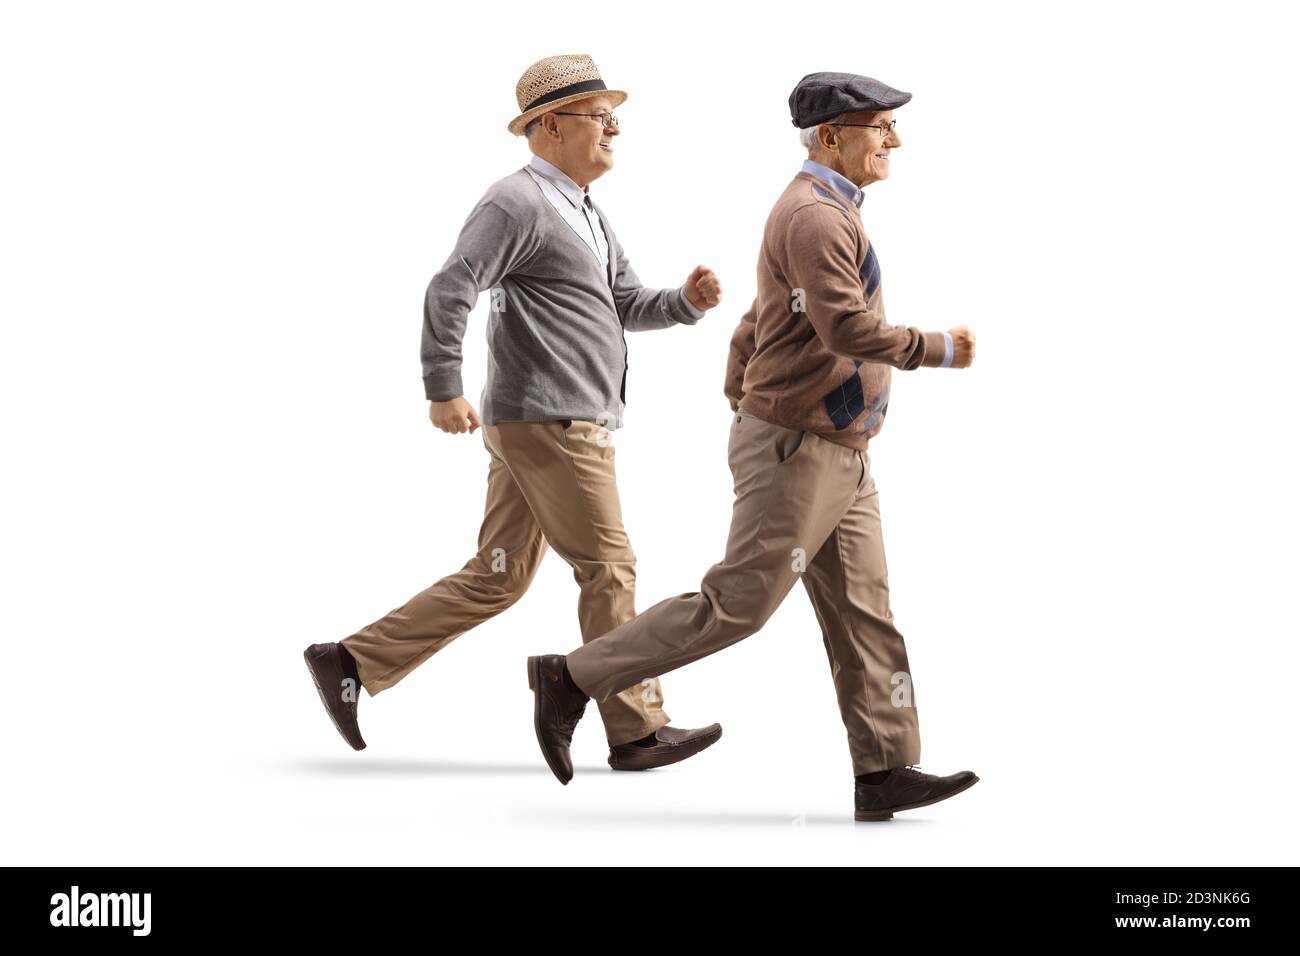 Two elderly men running isolated on white background Stock Photo